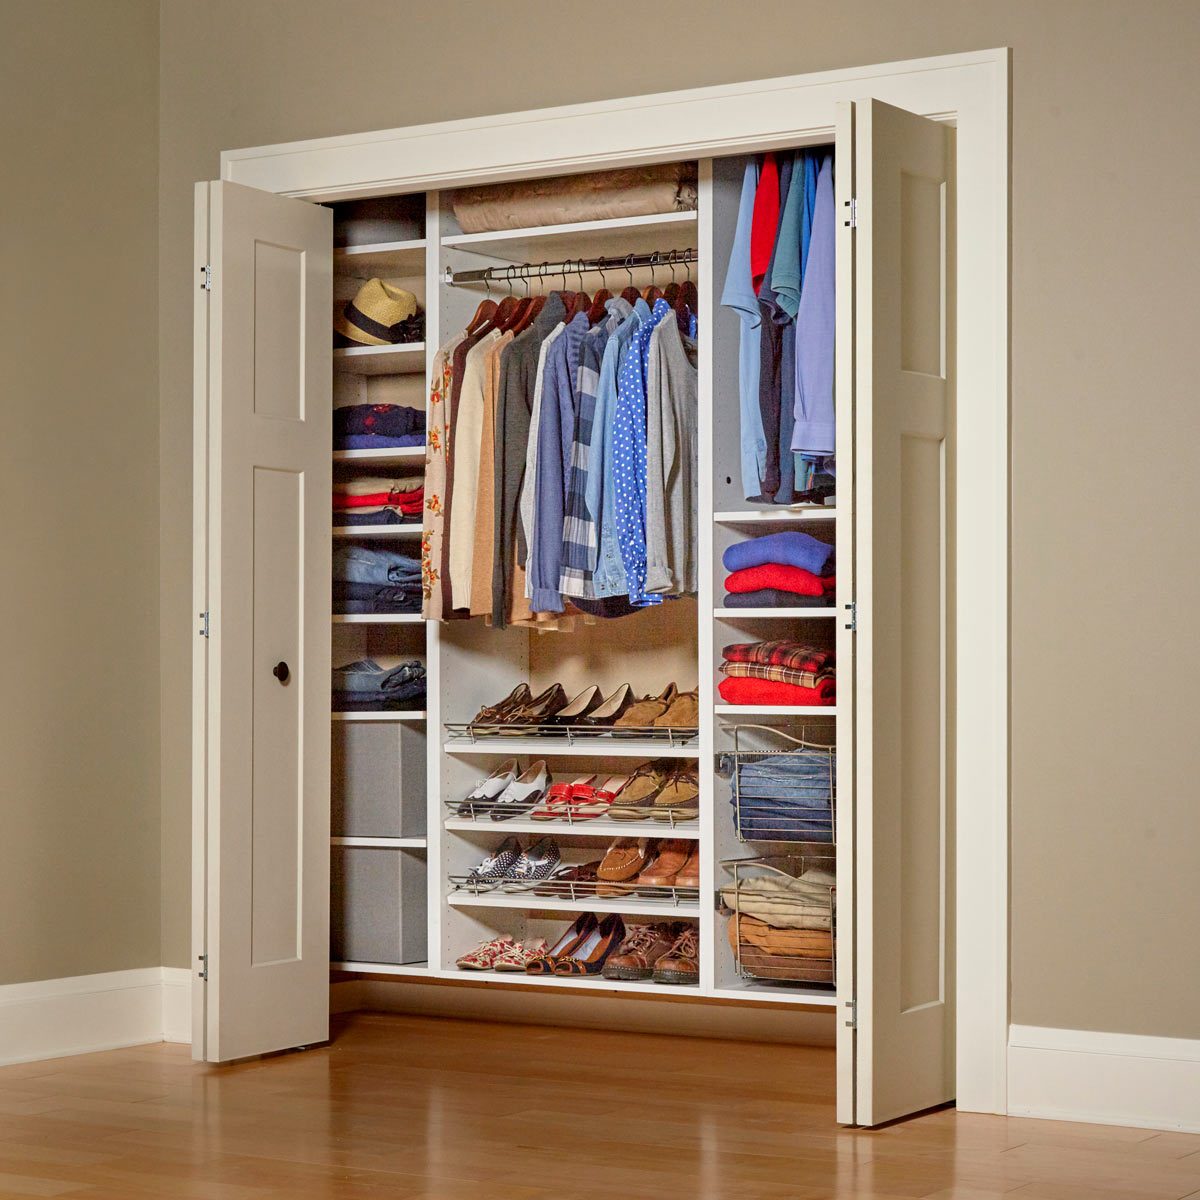 Build Your Own Melamine Closet Organizer (DIY) | Family Handyman